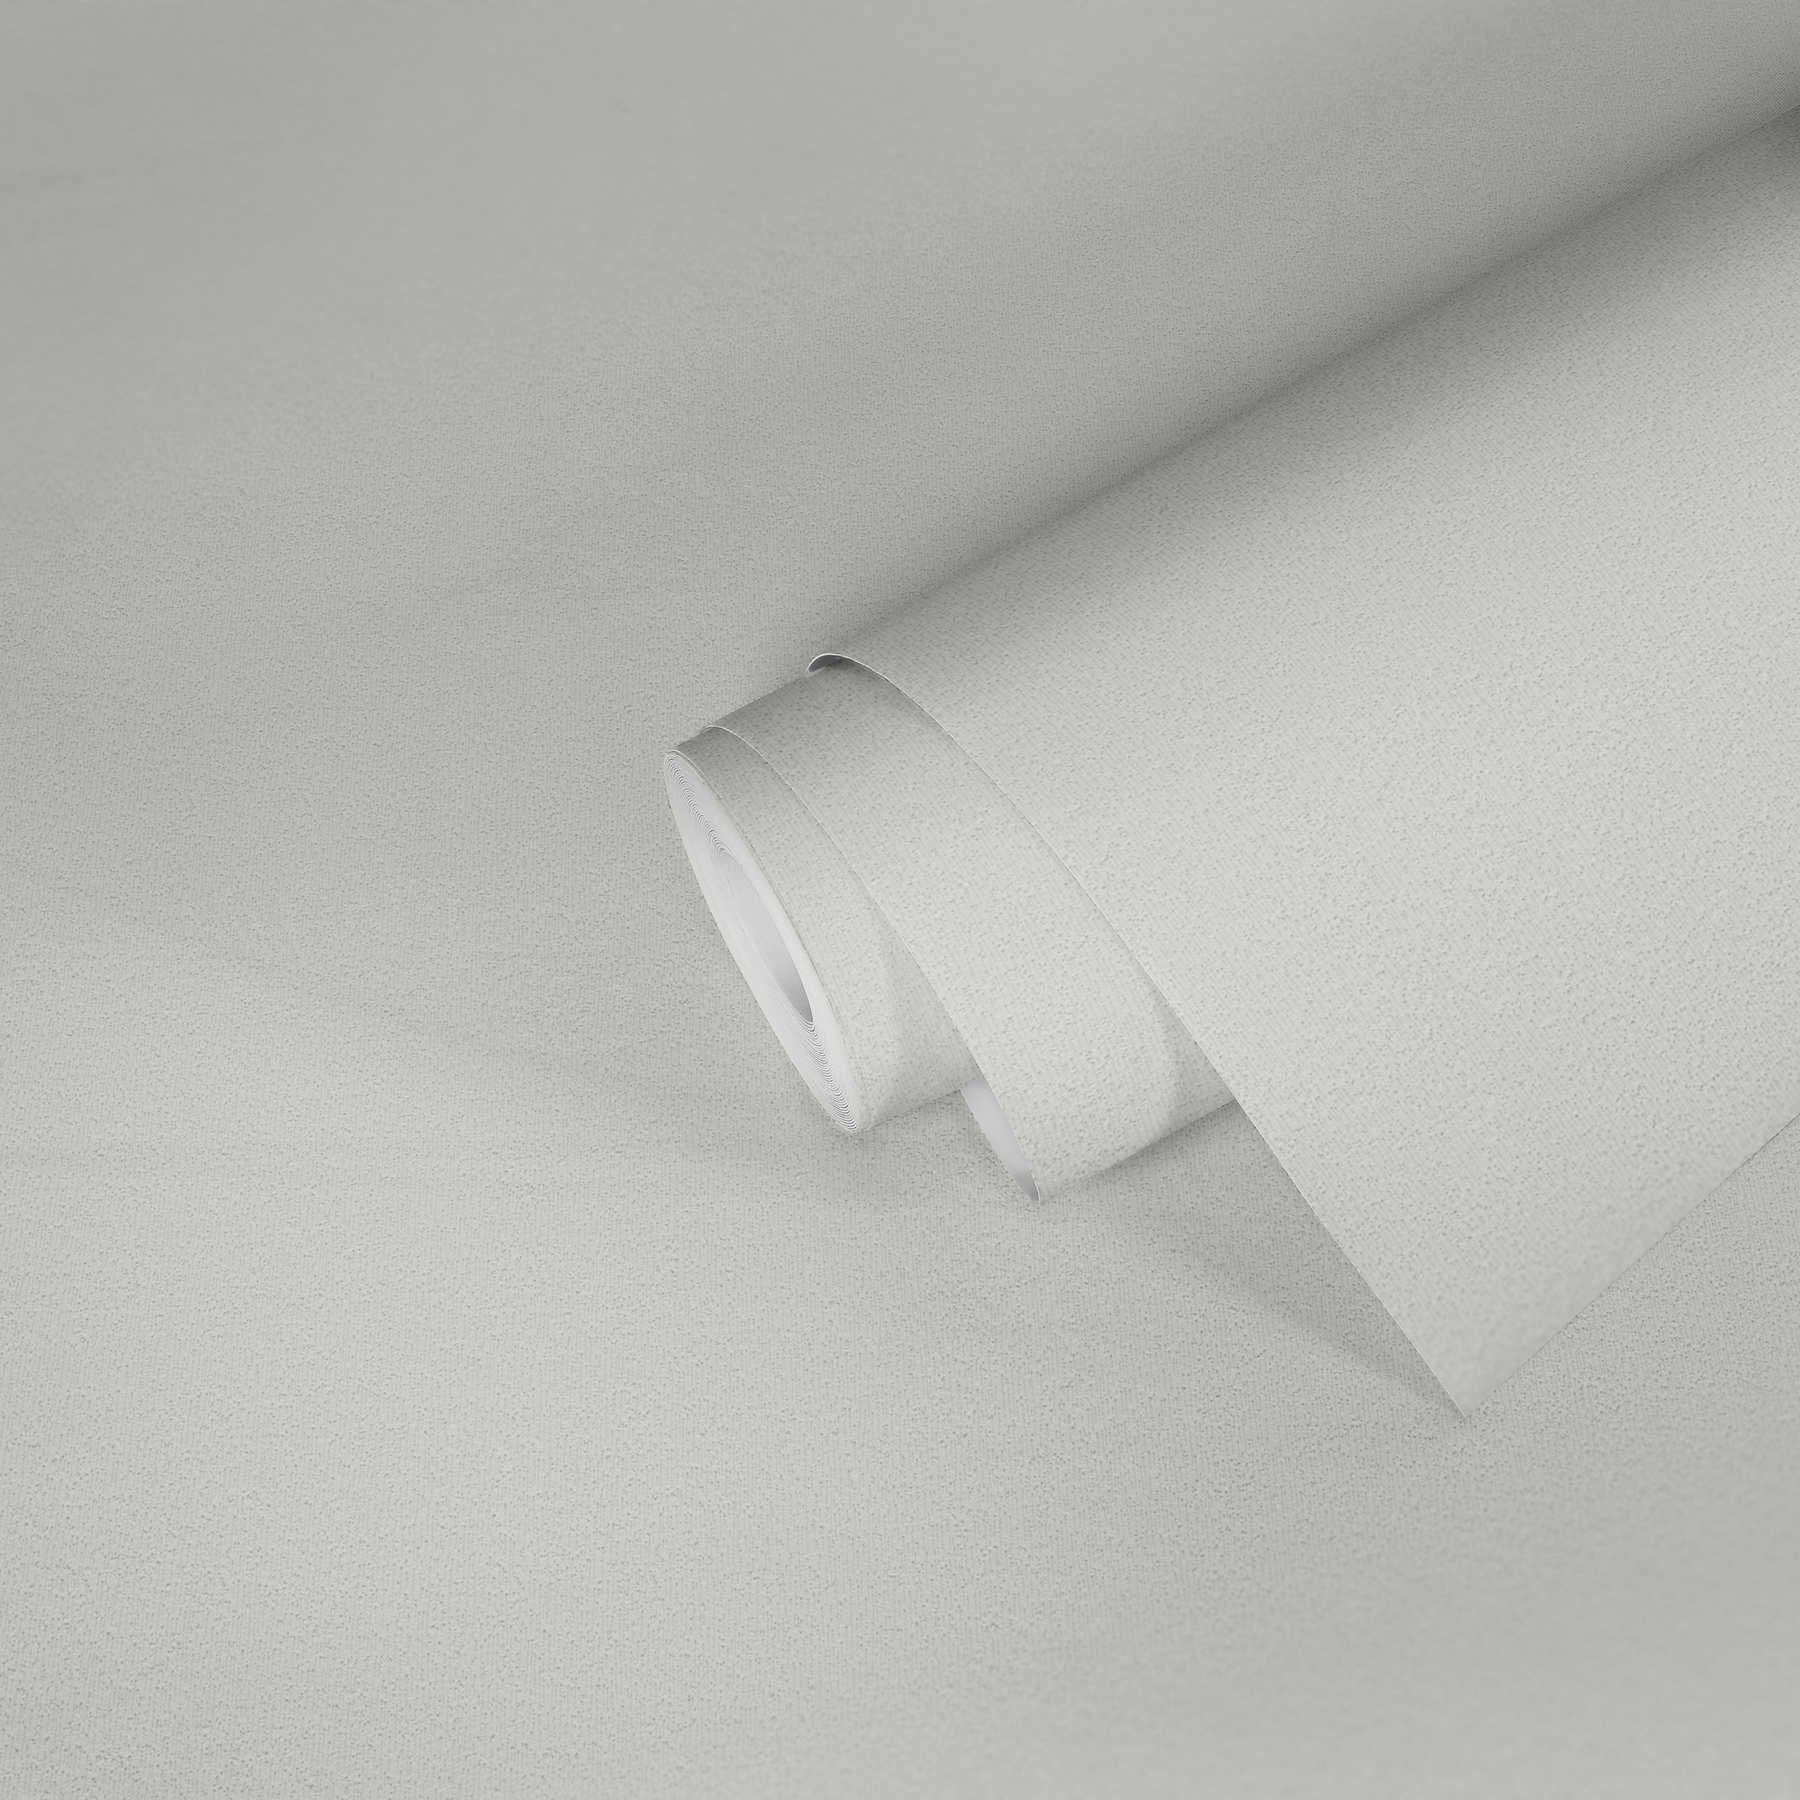             Carta da parati strutturata con struttura piatta in gesso - bianco
        